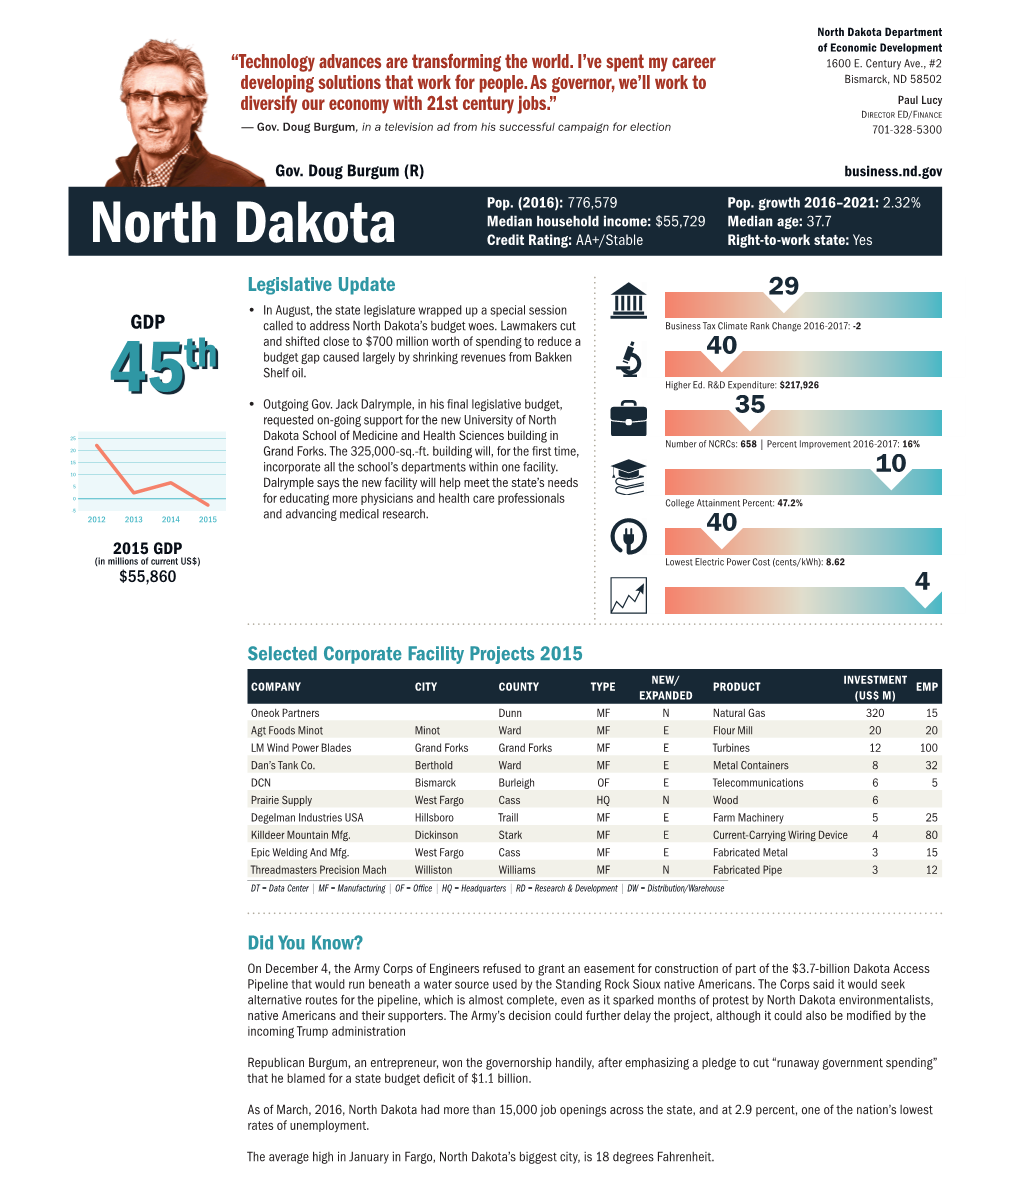 North Dakota Department of Economic Development “Technology Advances Are Transforming the World